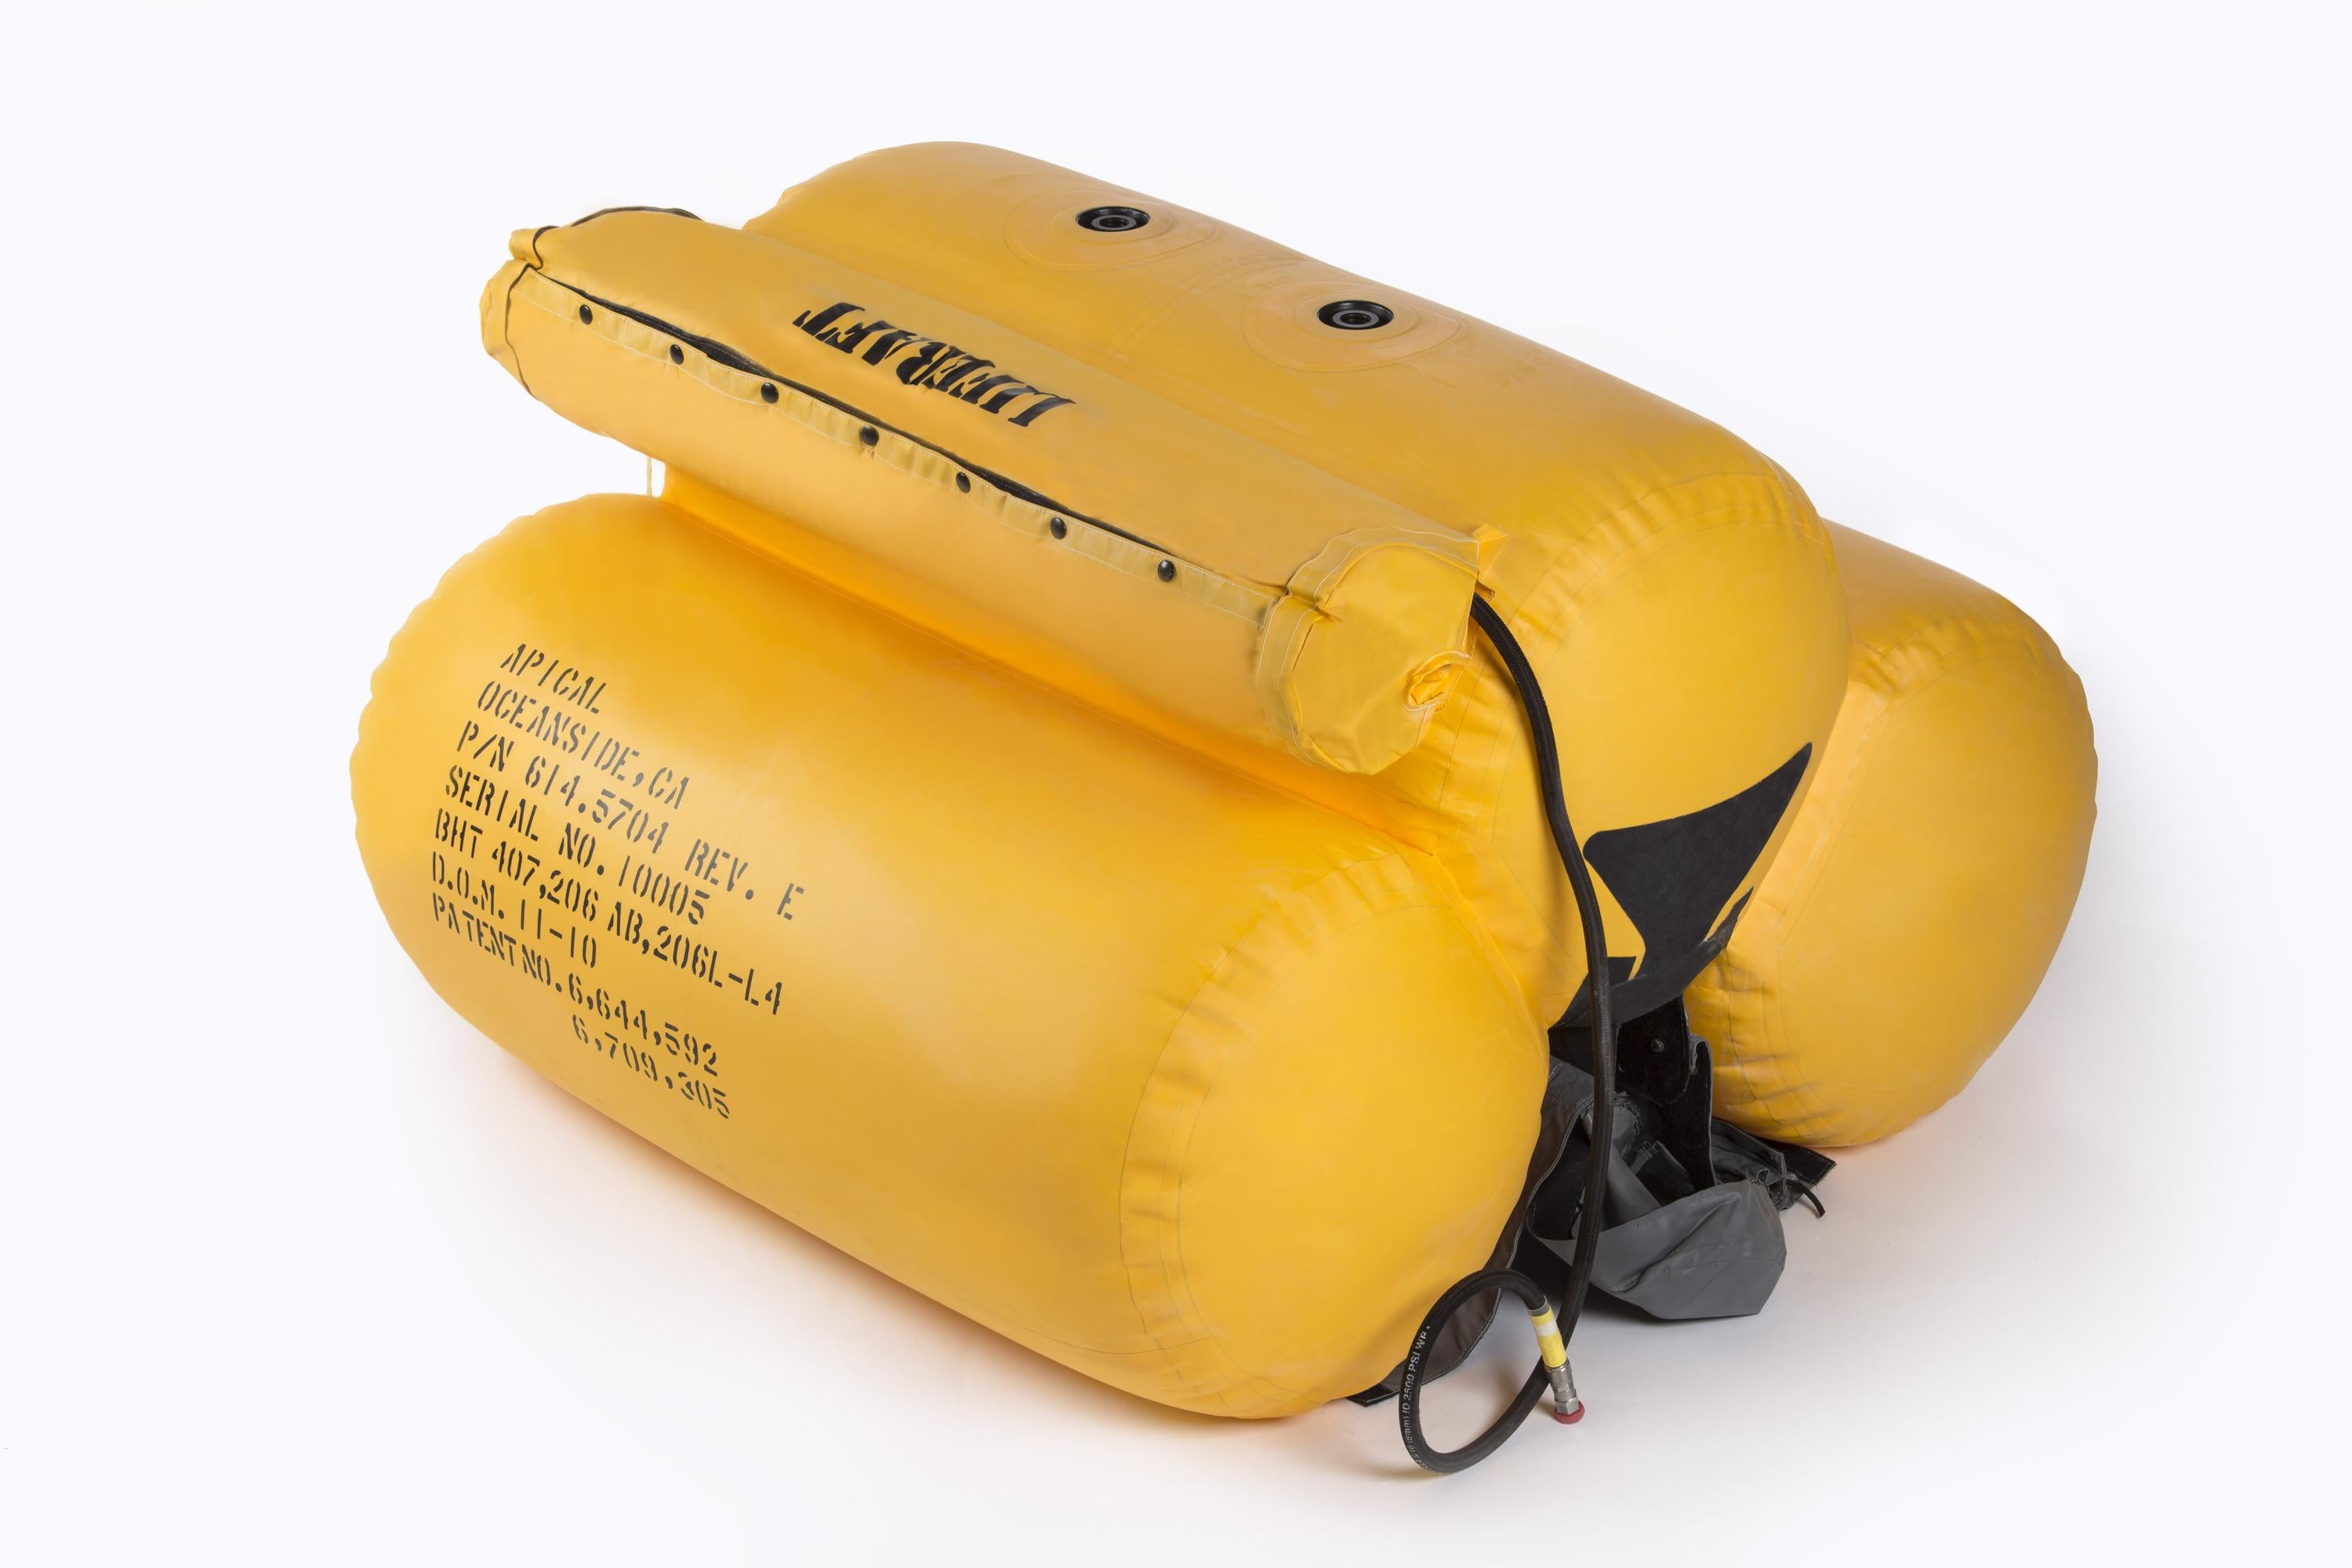 206L tri-bag float system with liferaft 